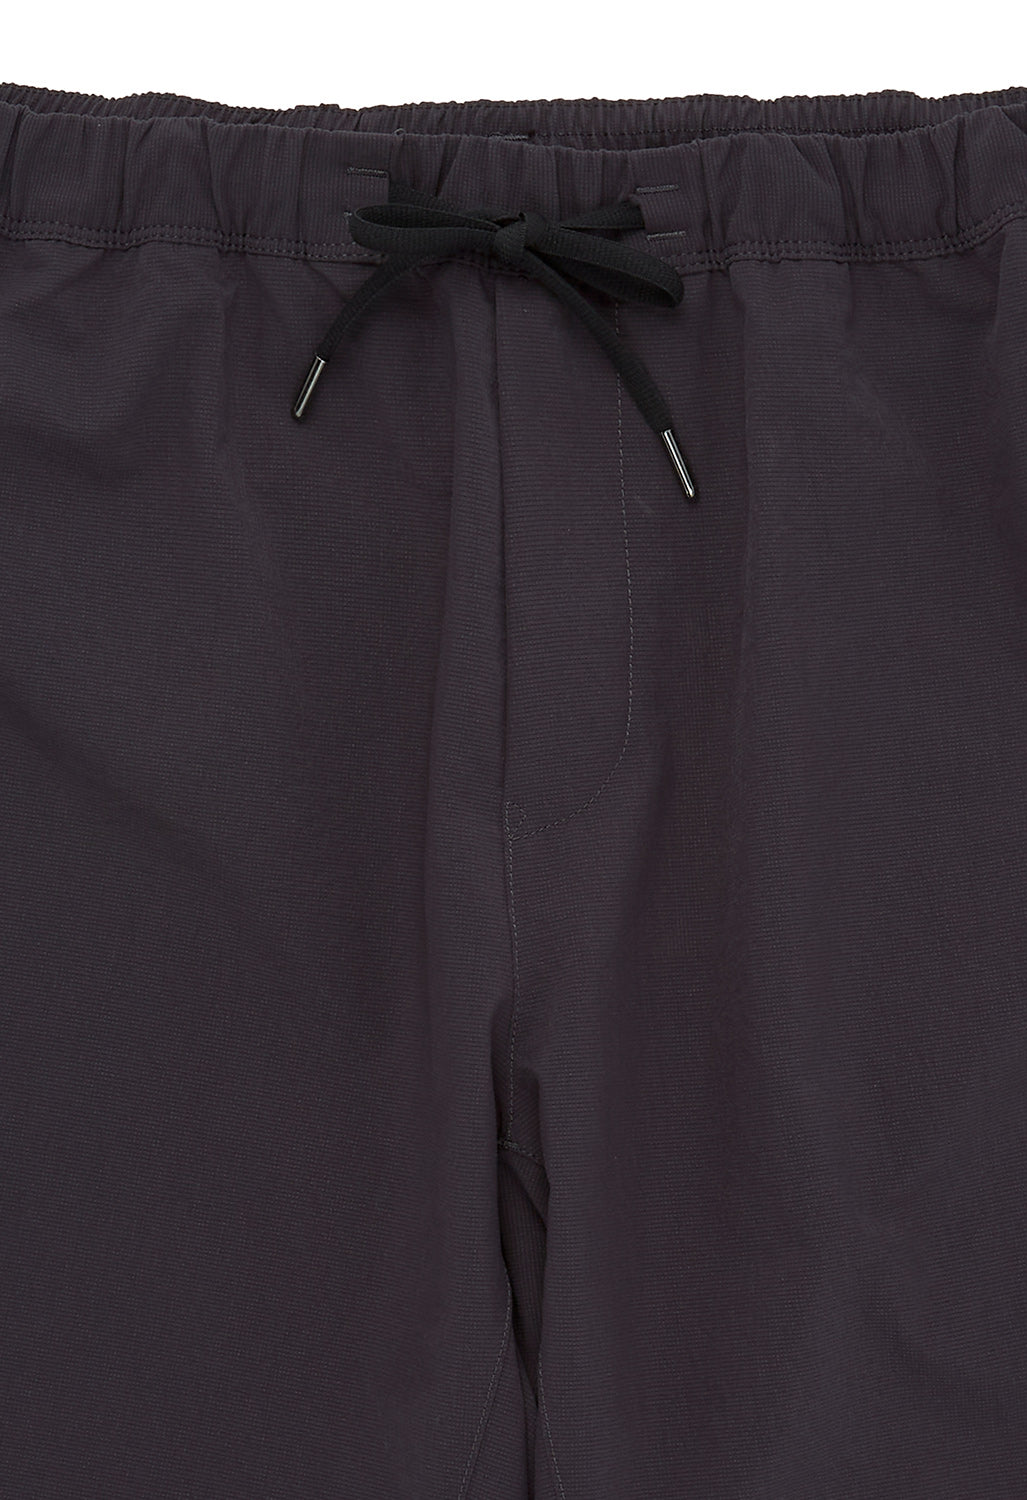 Nanga Men's Dot Air Comfy Shorts - Black – Outsiders Store UK